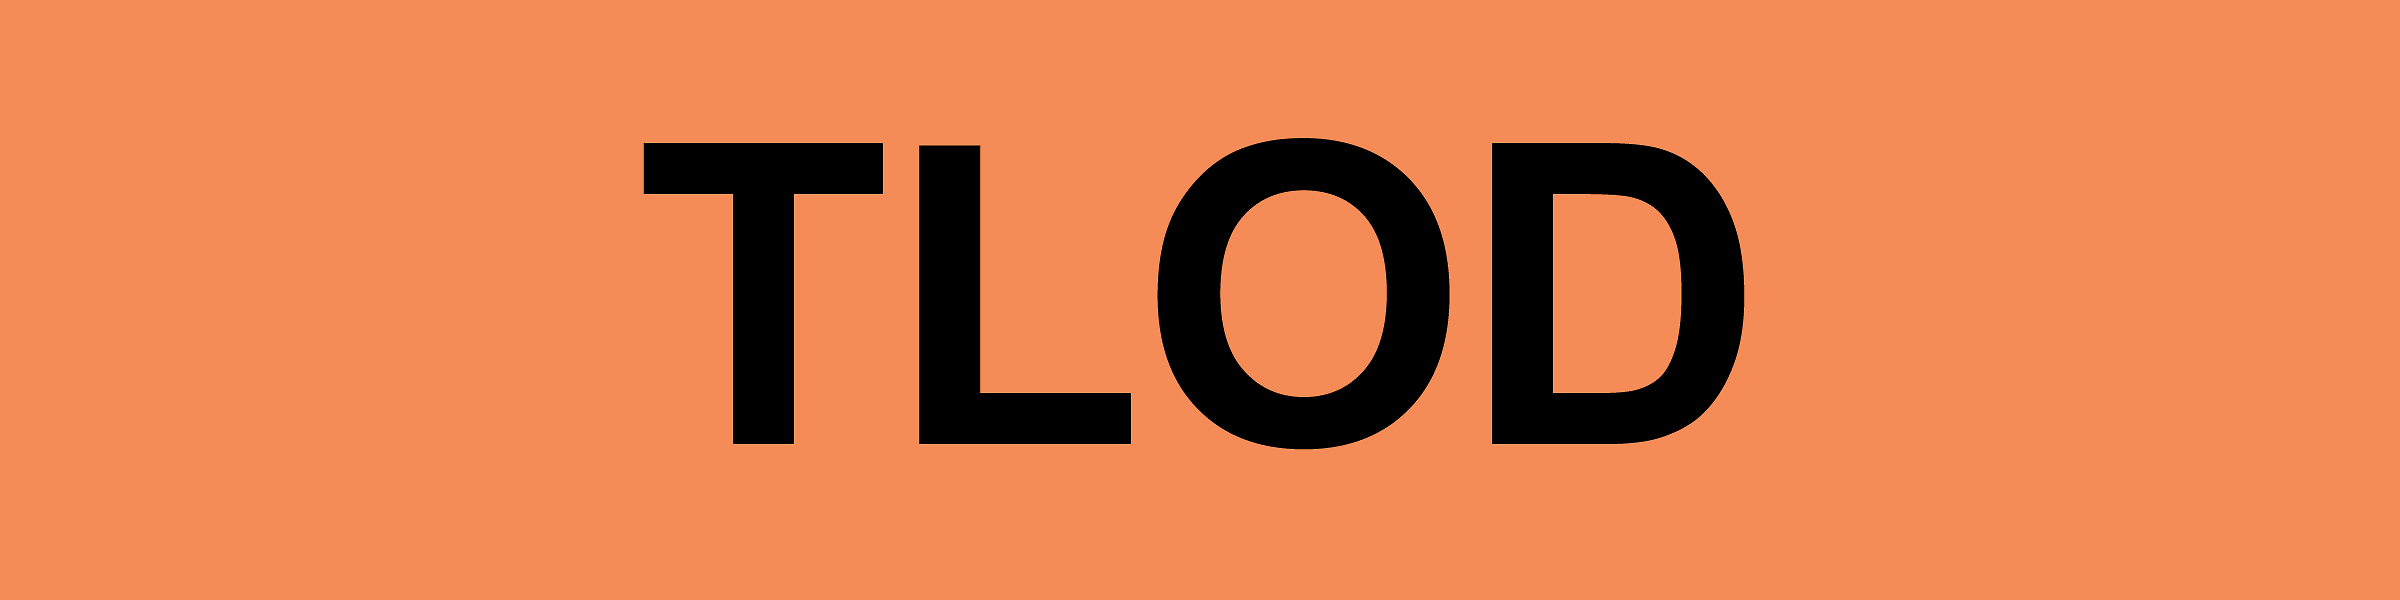 Tlod Logo - tlod: Recent Art, Design & Photography